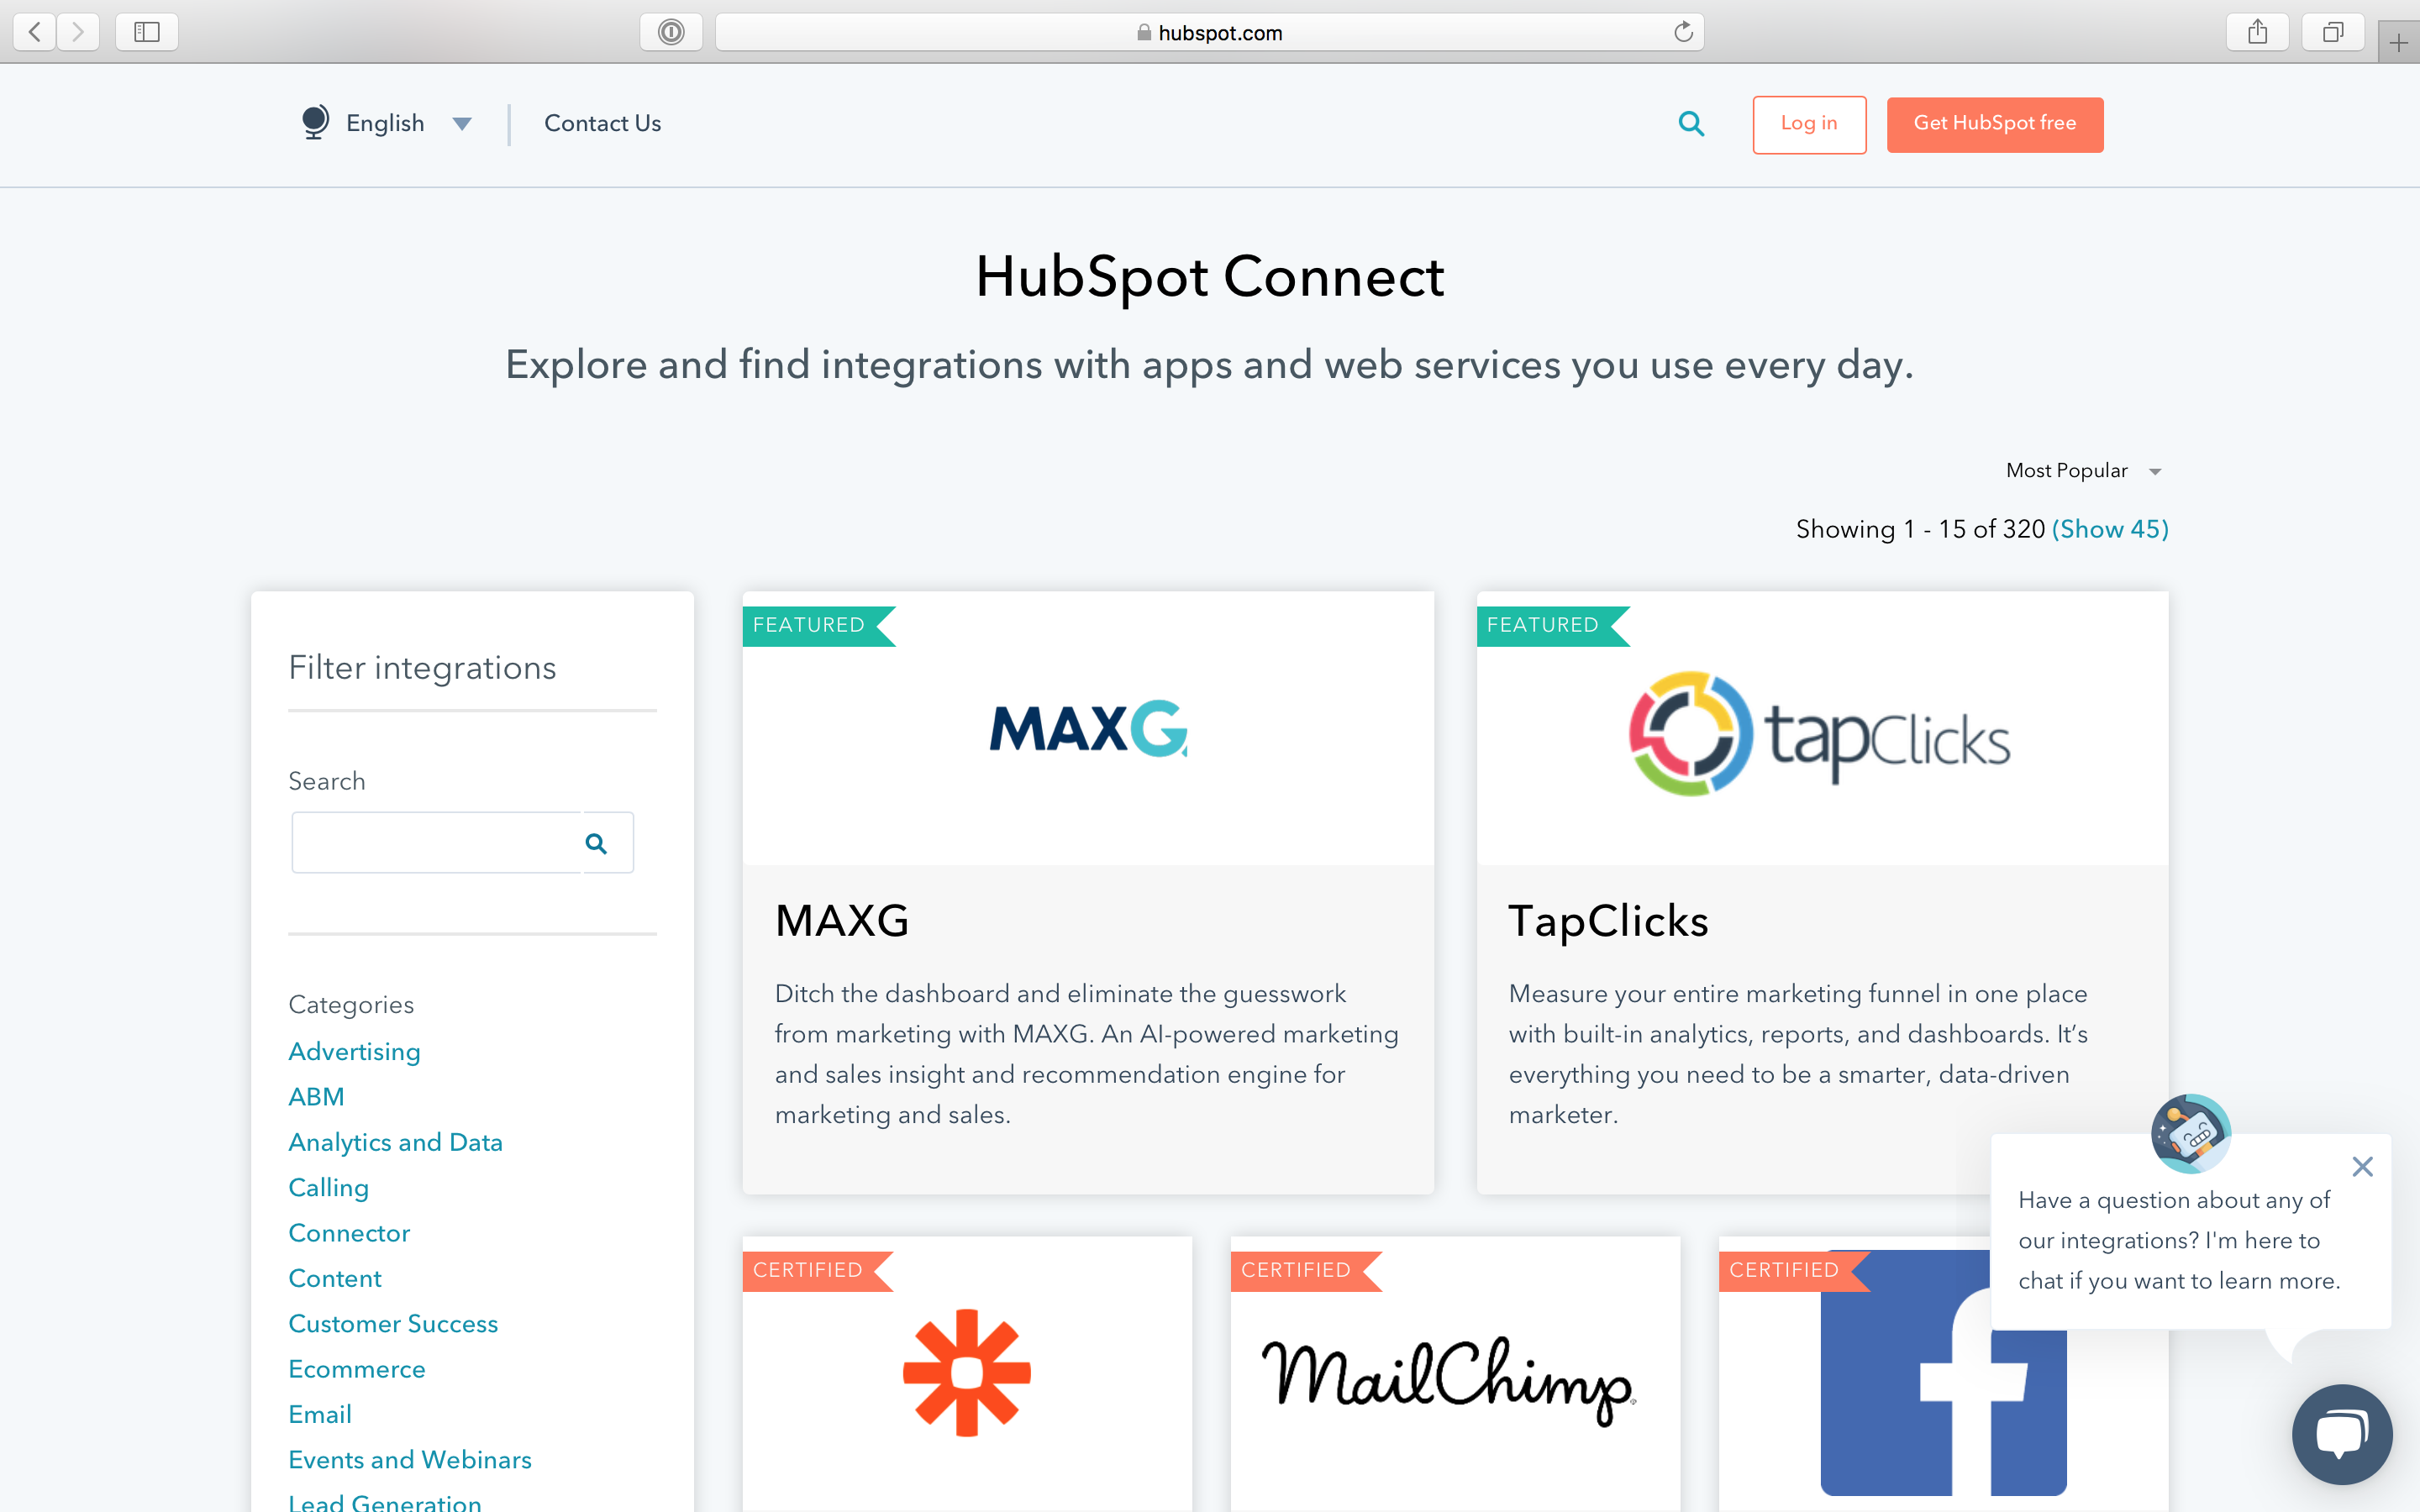 hubspot-integrations-20190603